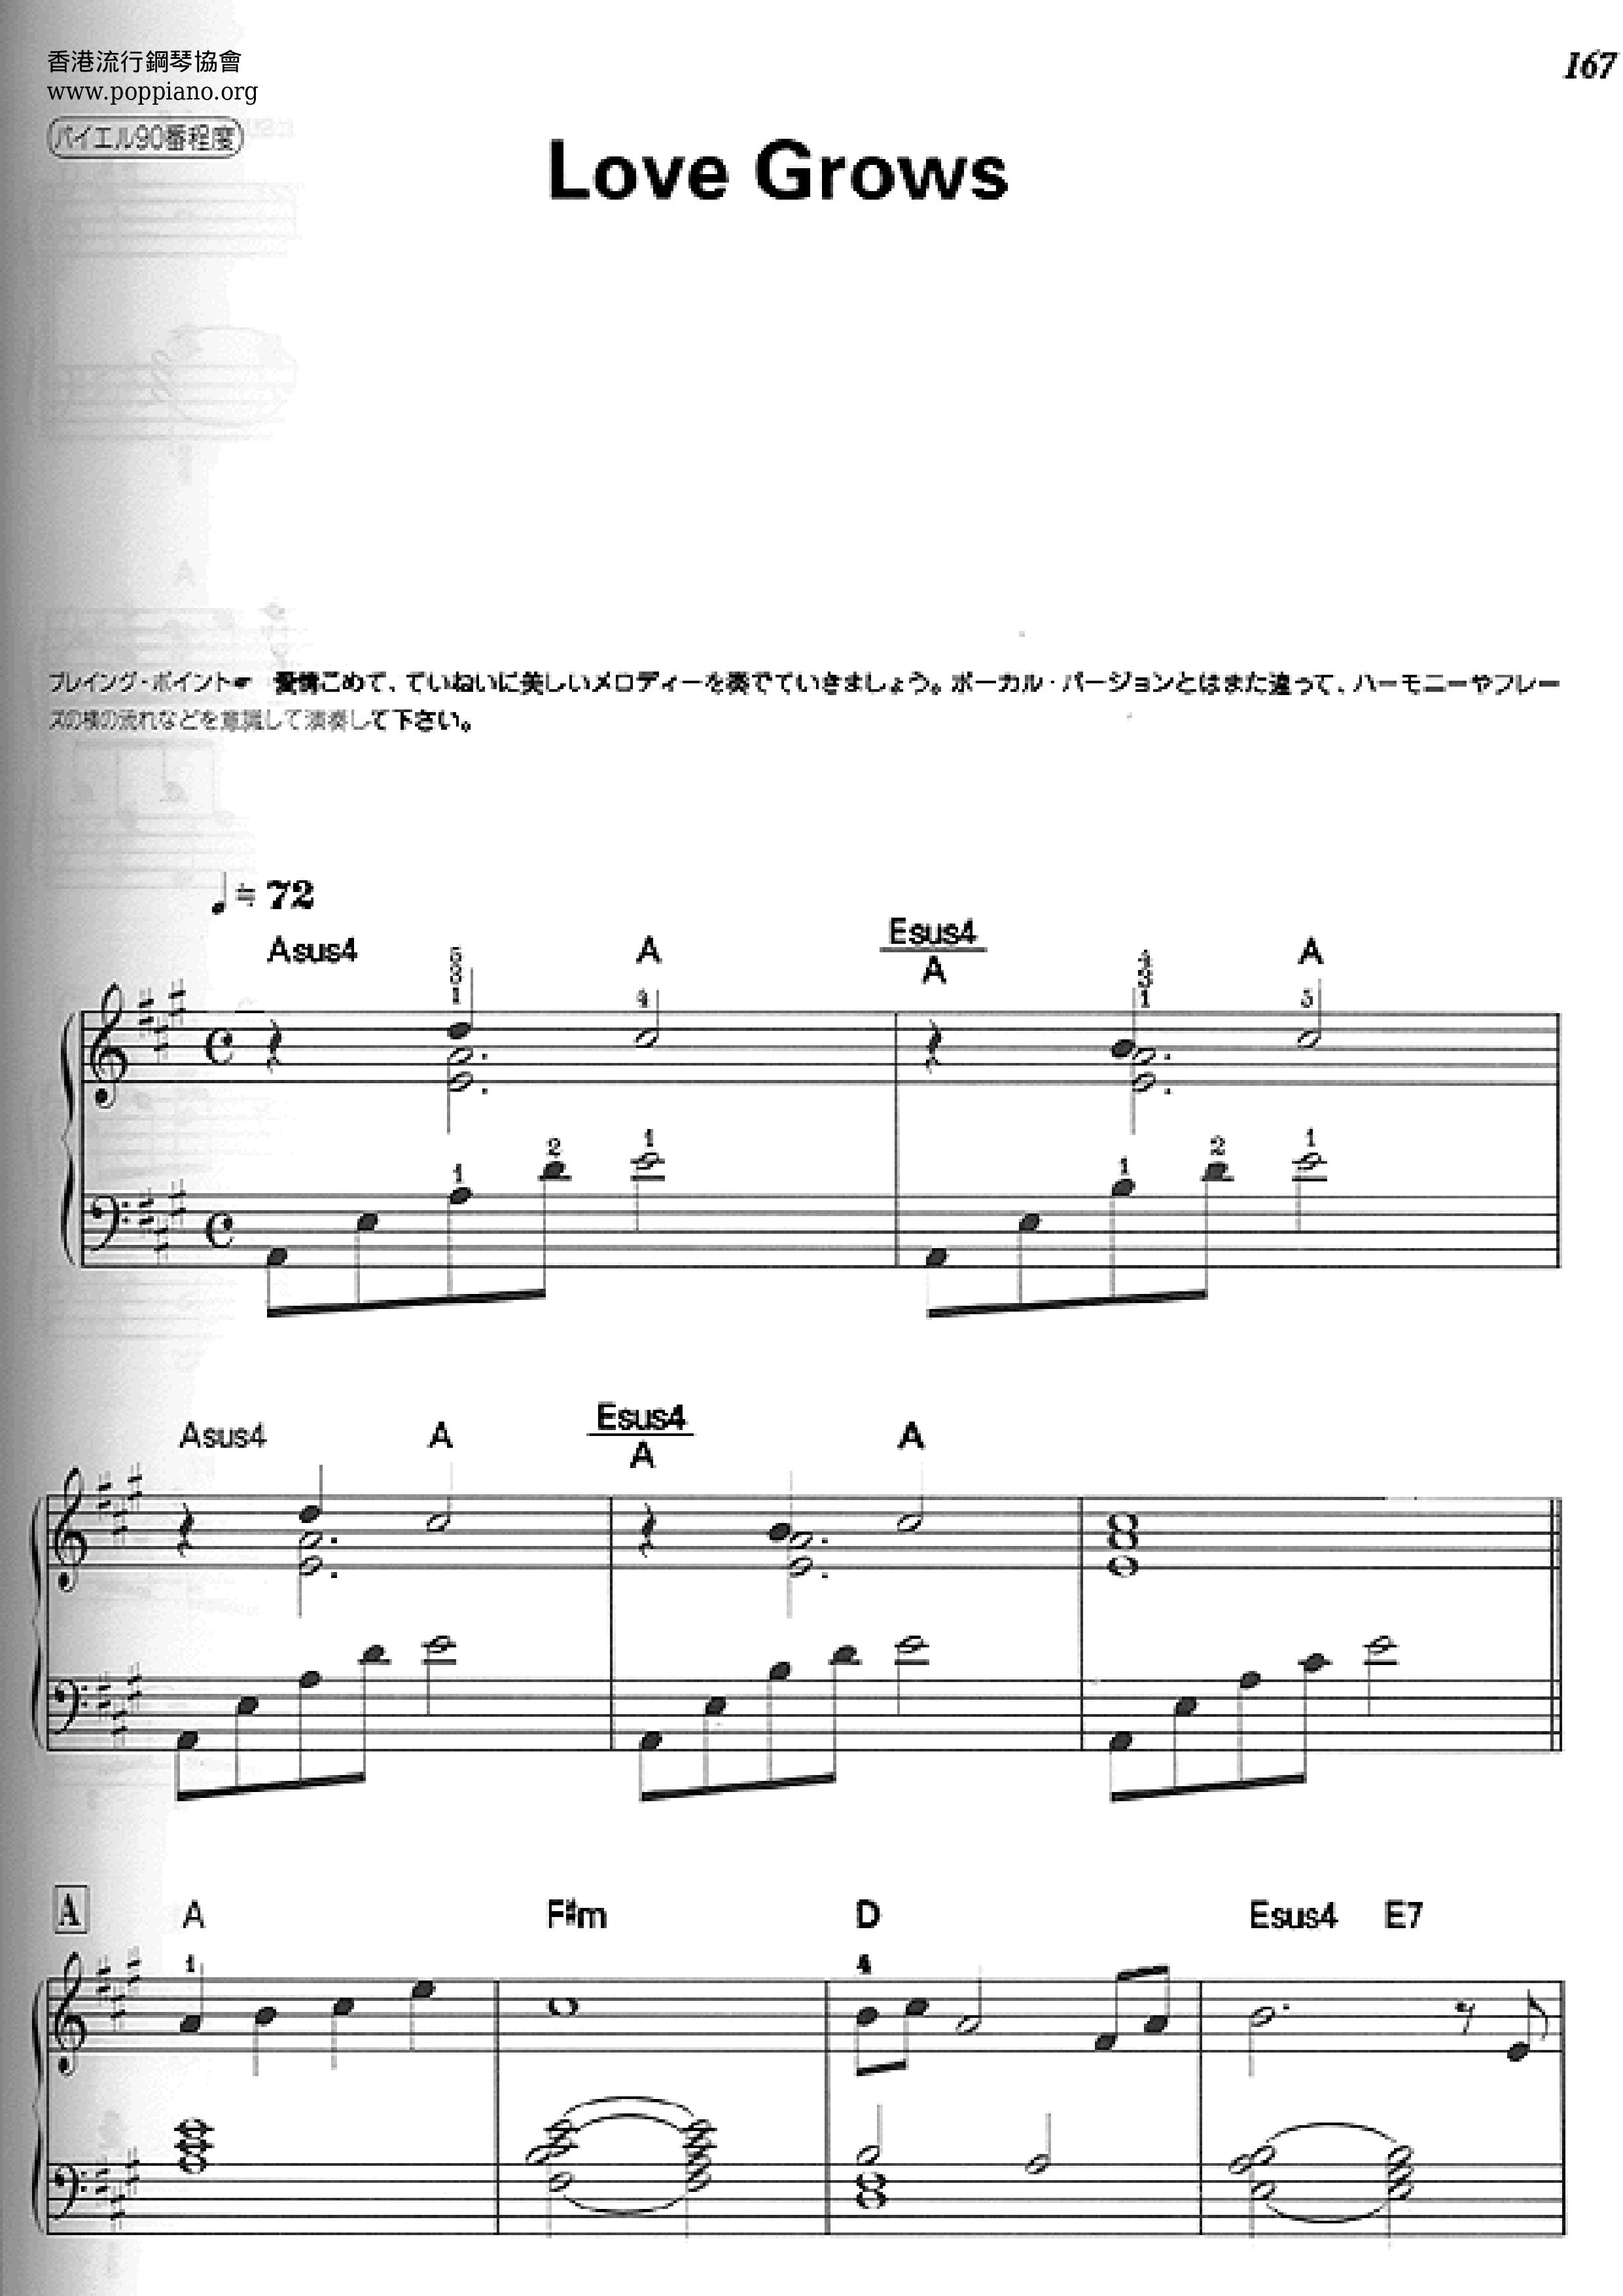 Final Fantasy VIII-Love Grows Sheet Music pdf, - Free Score Download ★